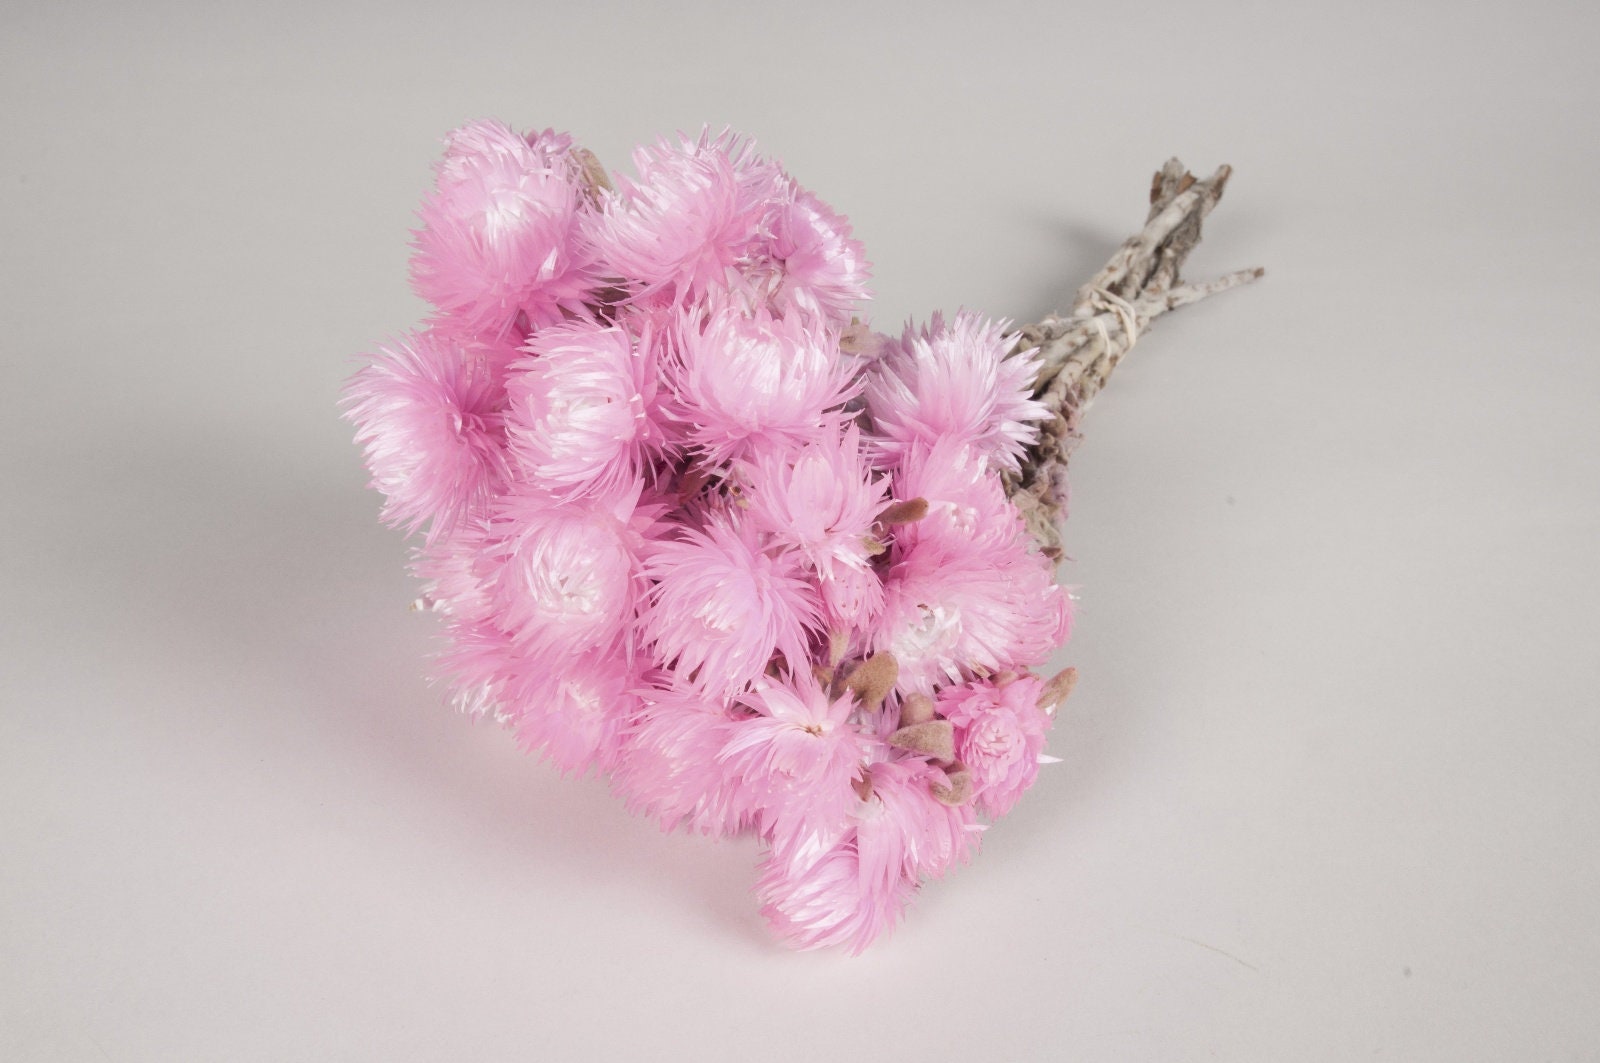 Helichrysum Vestitum capblumen baby pink color, 3oz bunch, rustic decoration